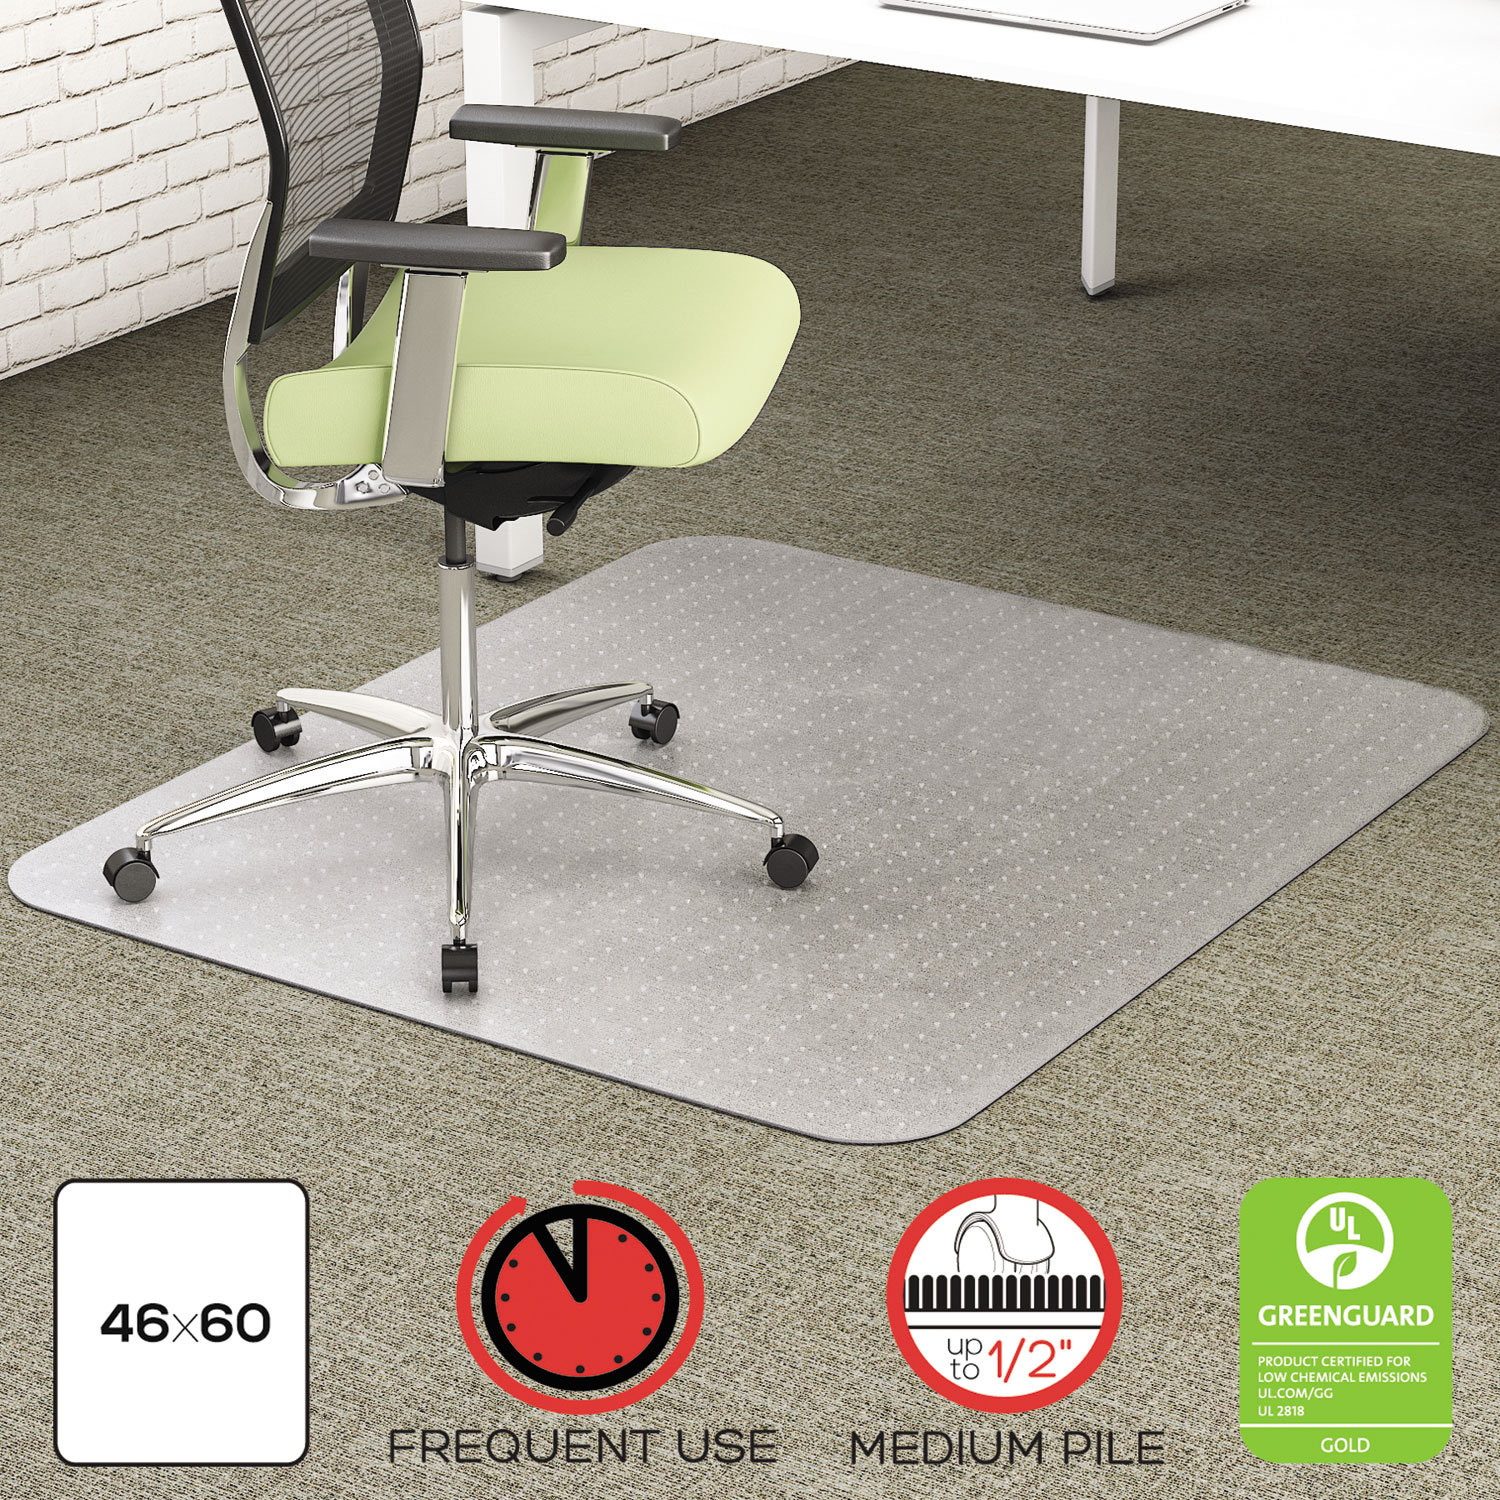  deflecto CM1K442FPET EnvironMat Recycled Anytime Use Chair Mat for Med Pile Carpet, 46 x 60, Clear (DEFCM1K442FPET) 